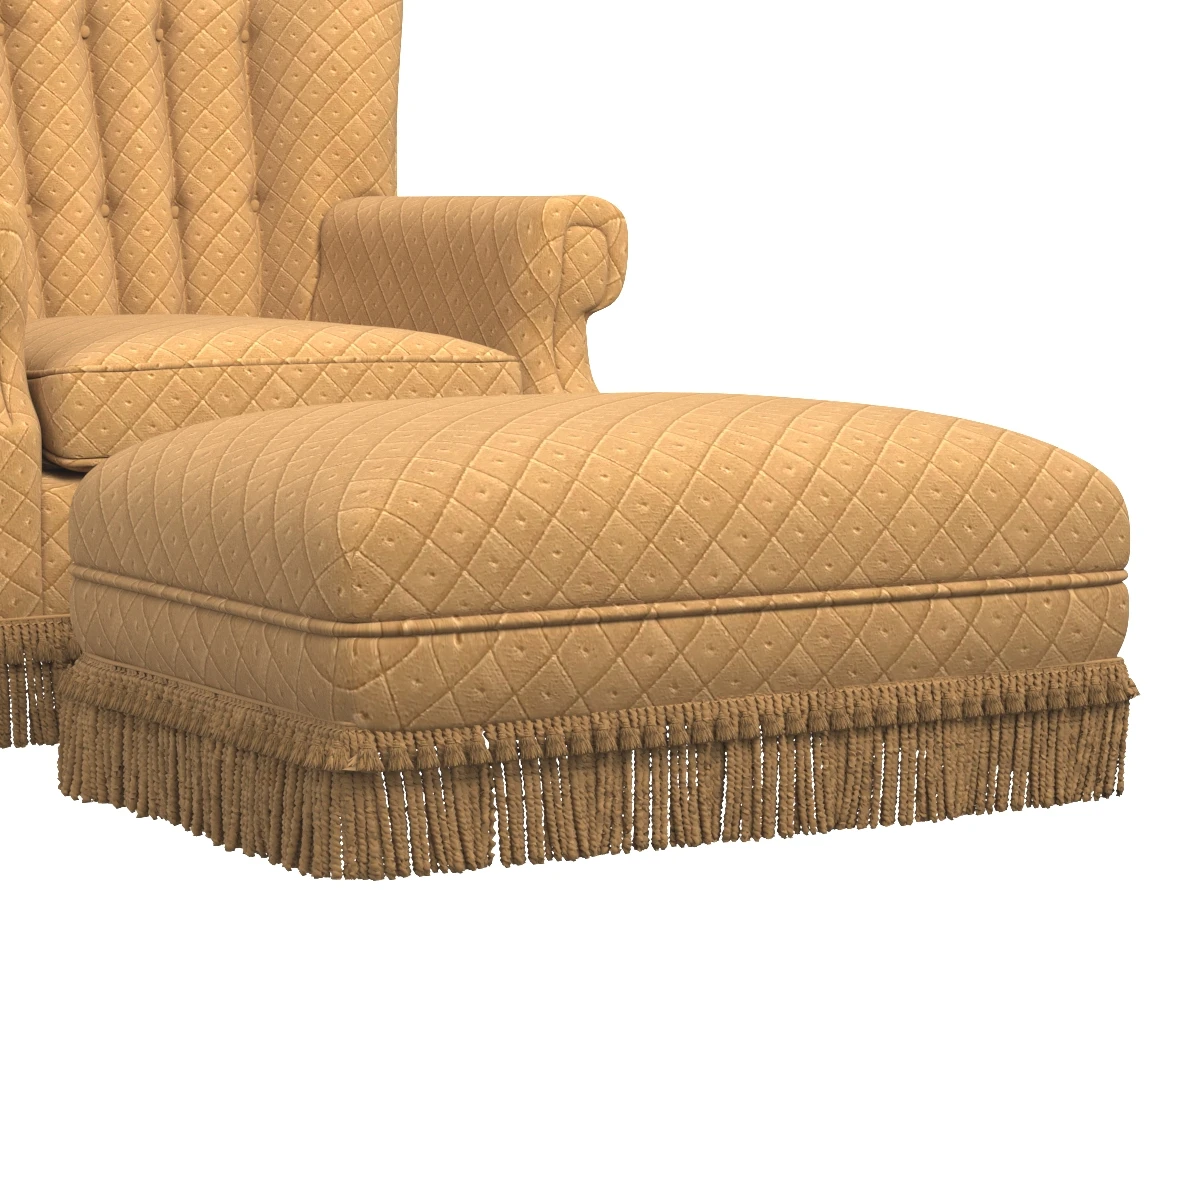 Art Deco Club Chair and Ottoman by Swaim 3D Model_04